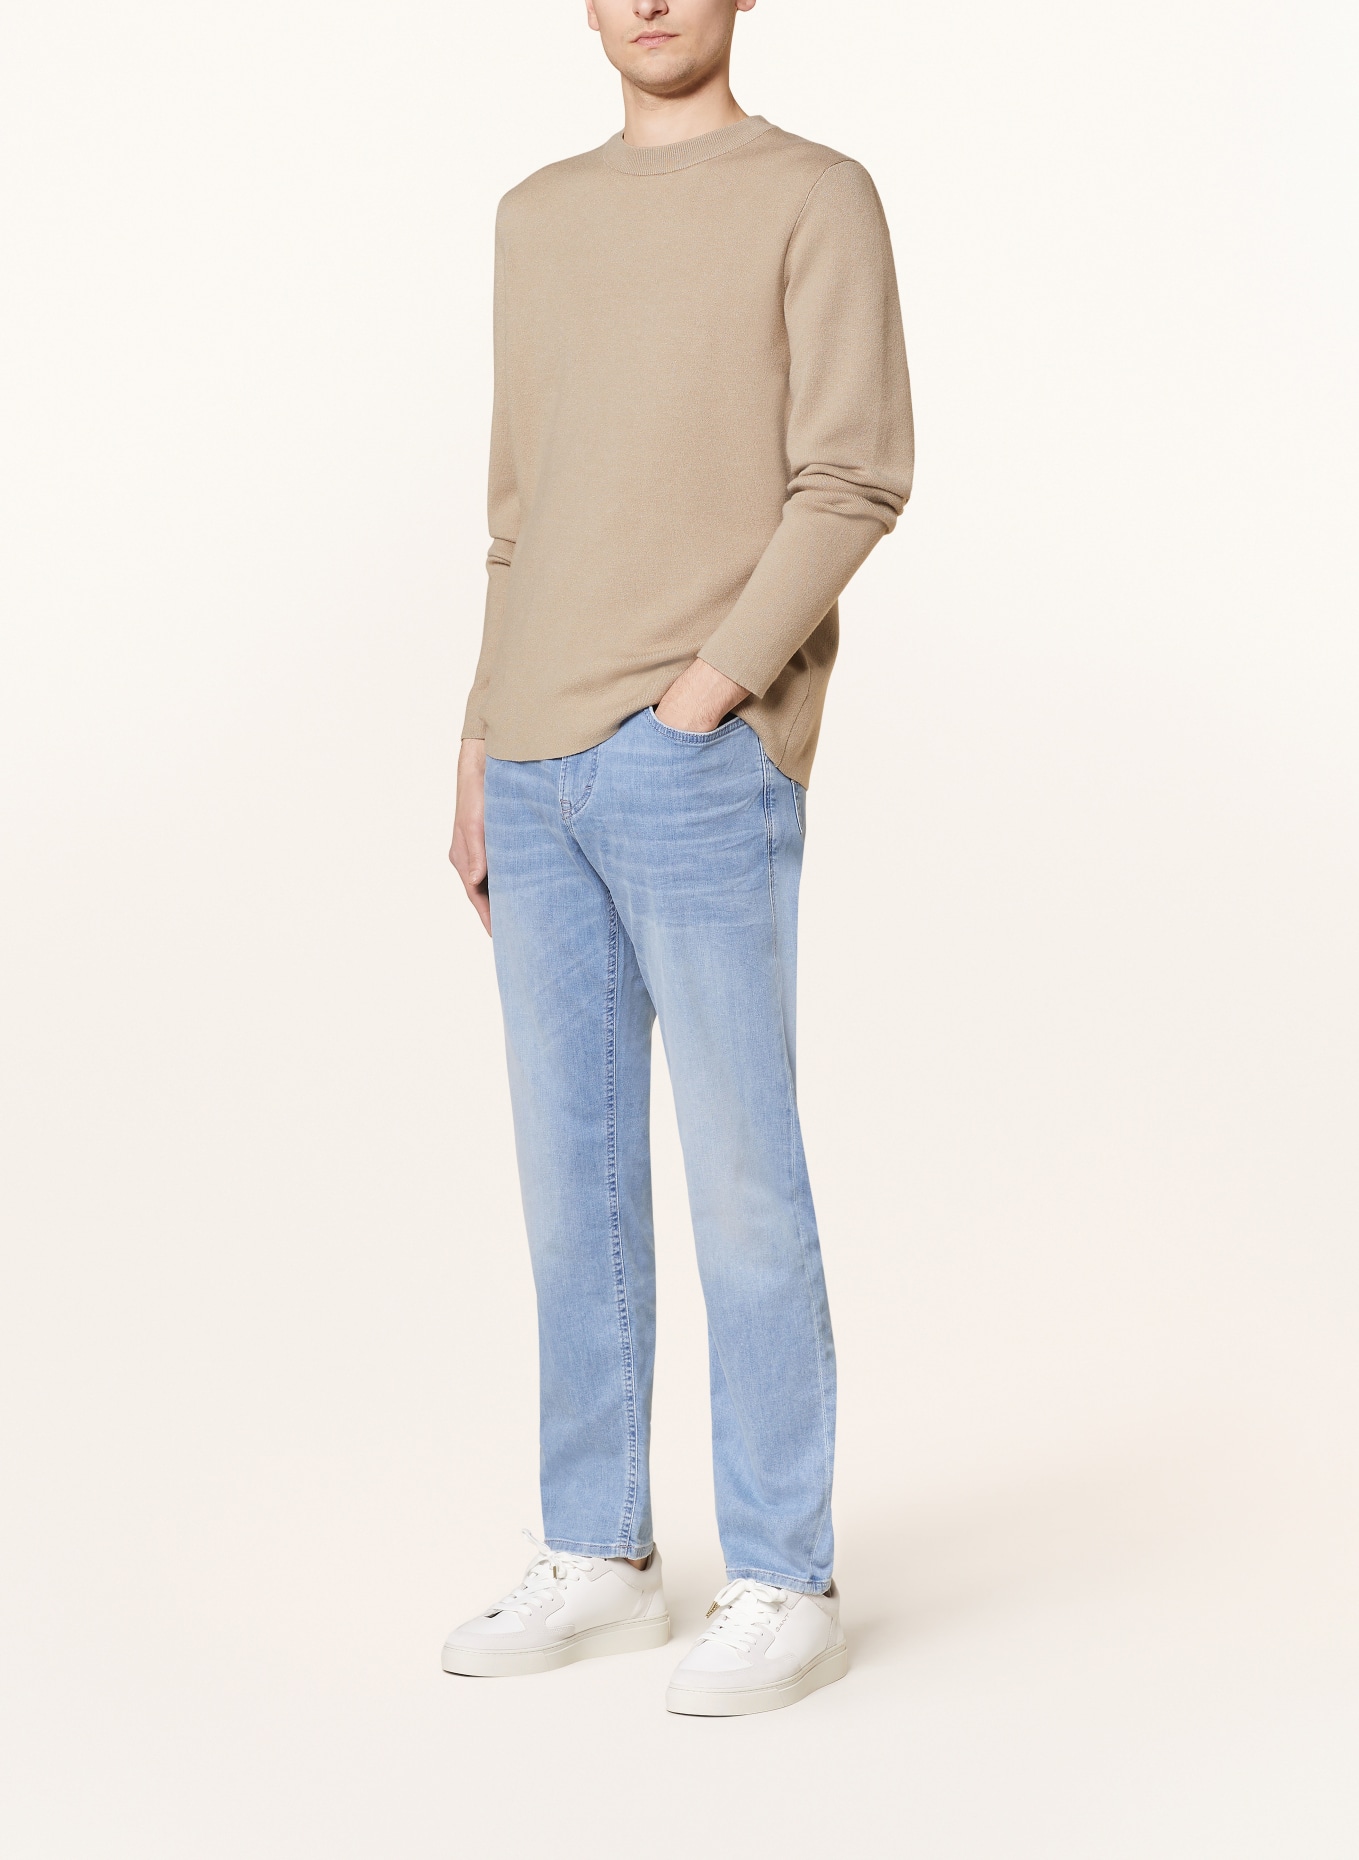 JOOP! JEANS Jeans MITCH Modern Fit, Farbe: 445 TurquoiseAqua              445 (Bild 2)